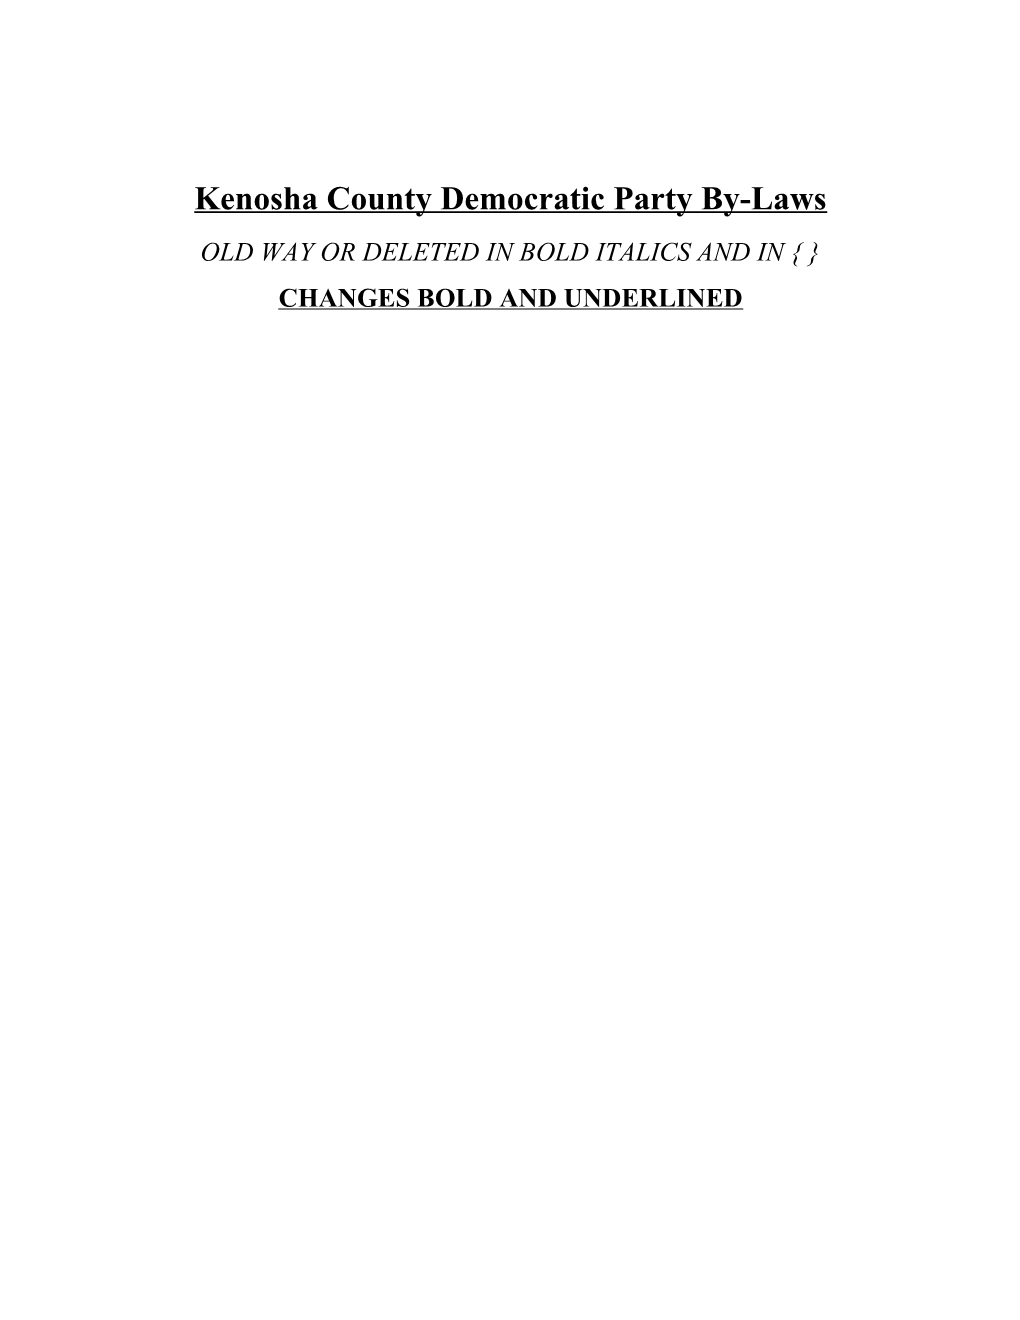 Kenosha County Democratic Party By-Laws